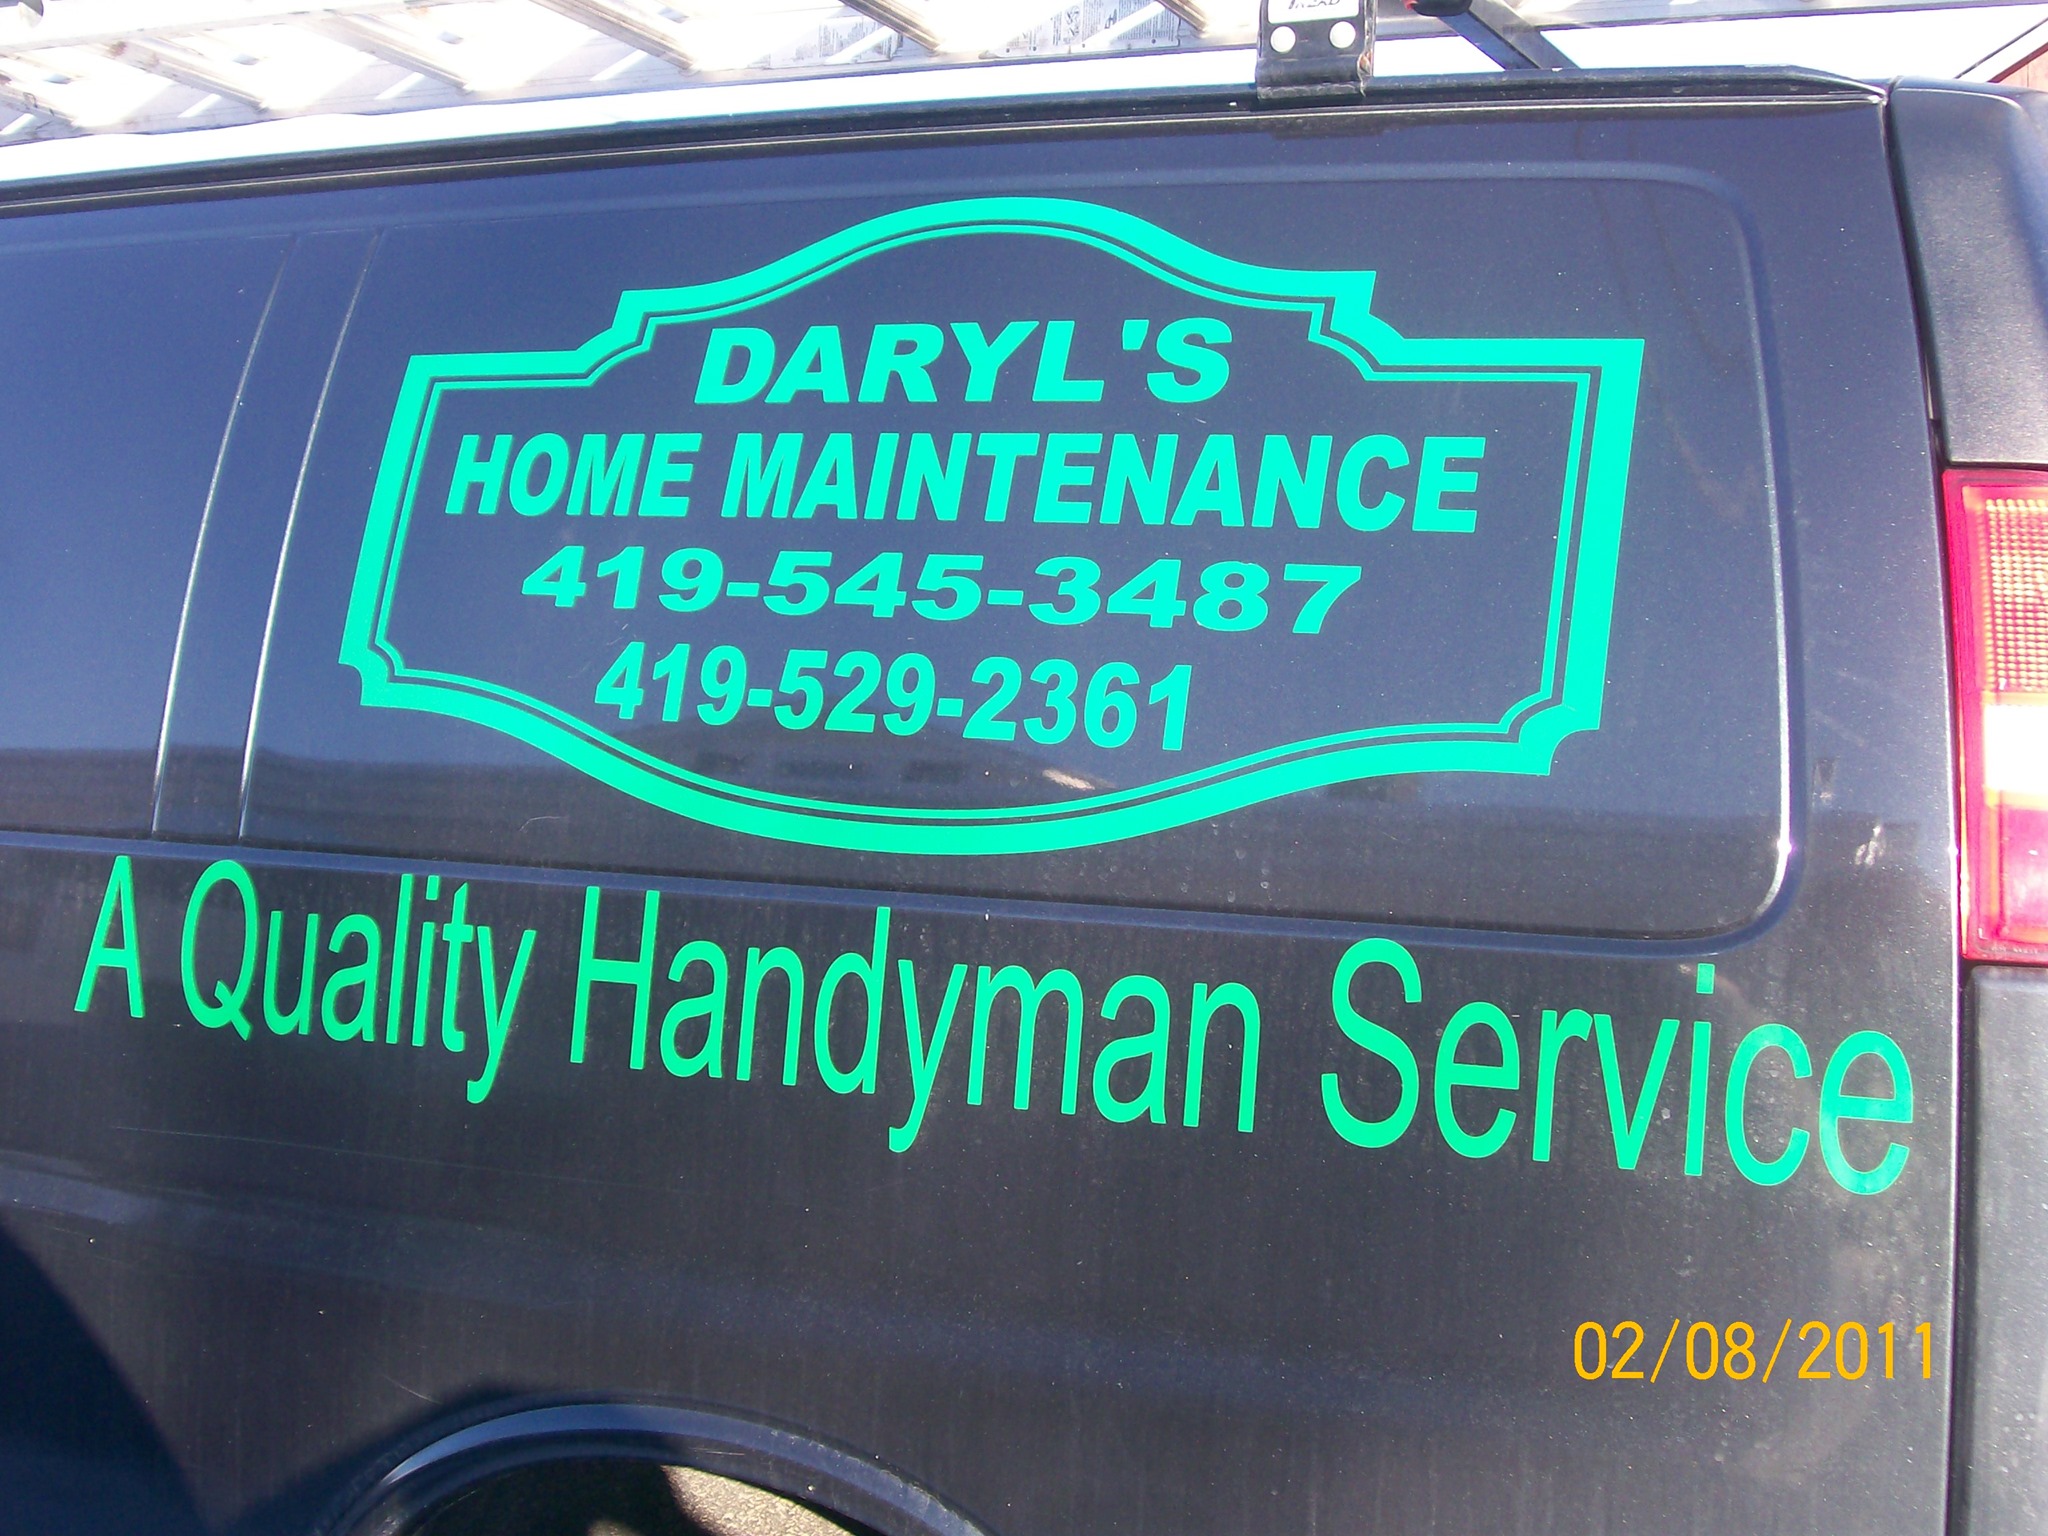 Daryl's Home Maintenance